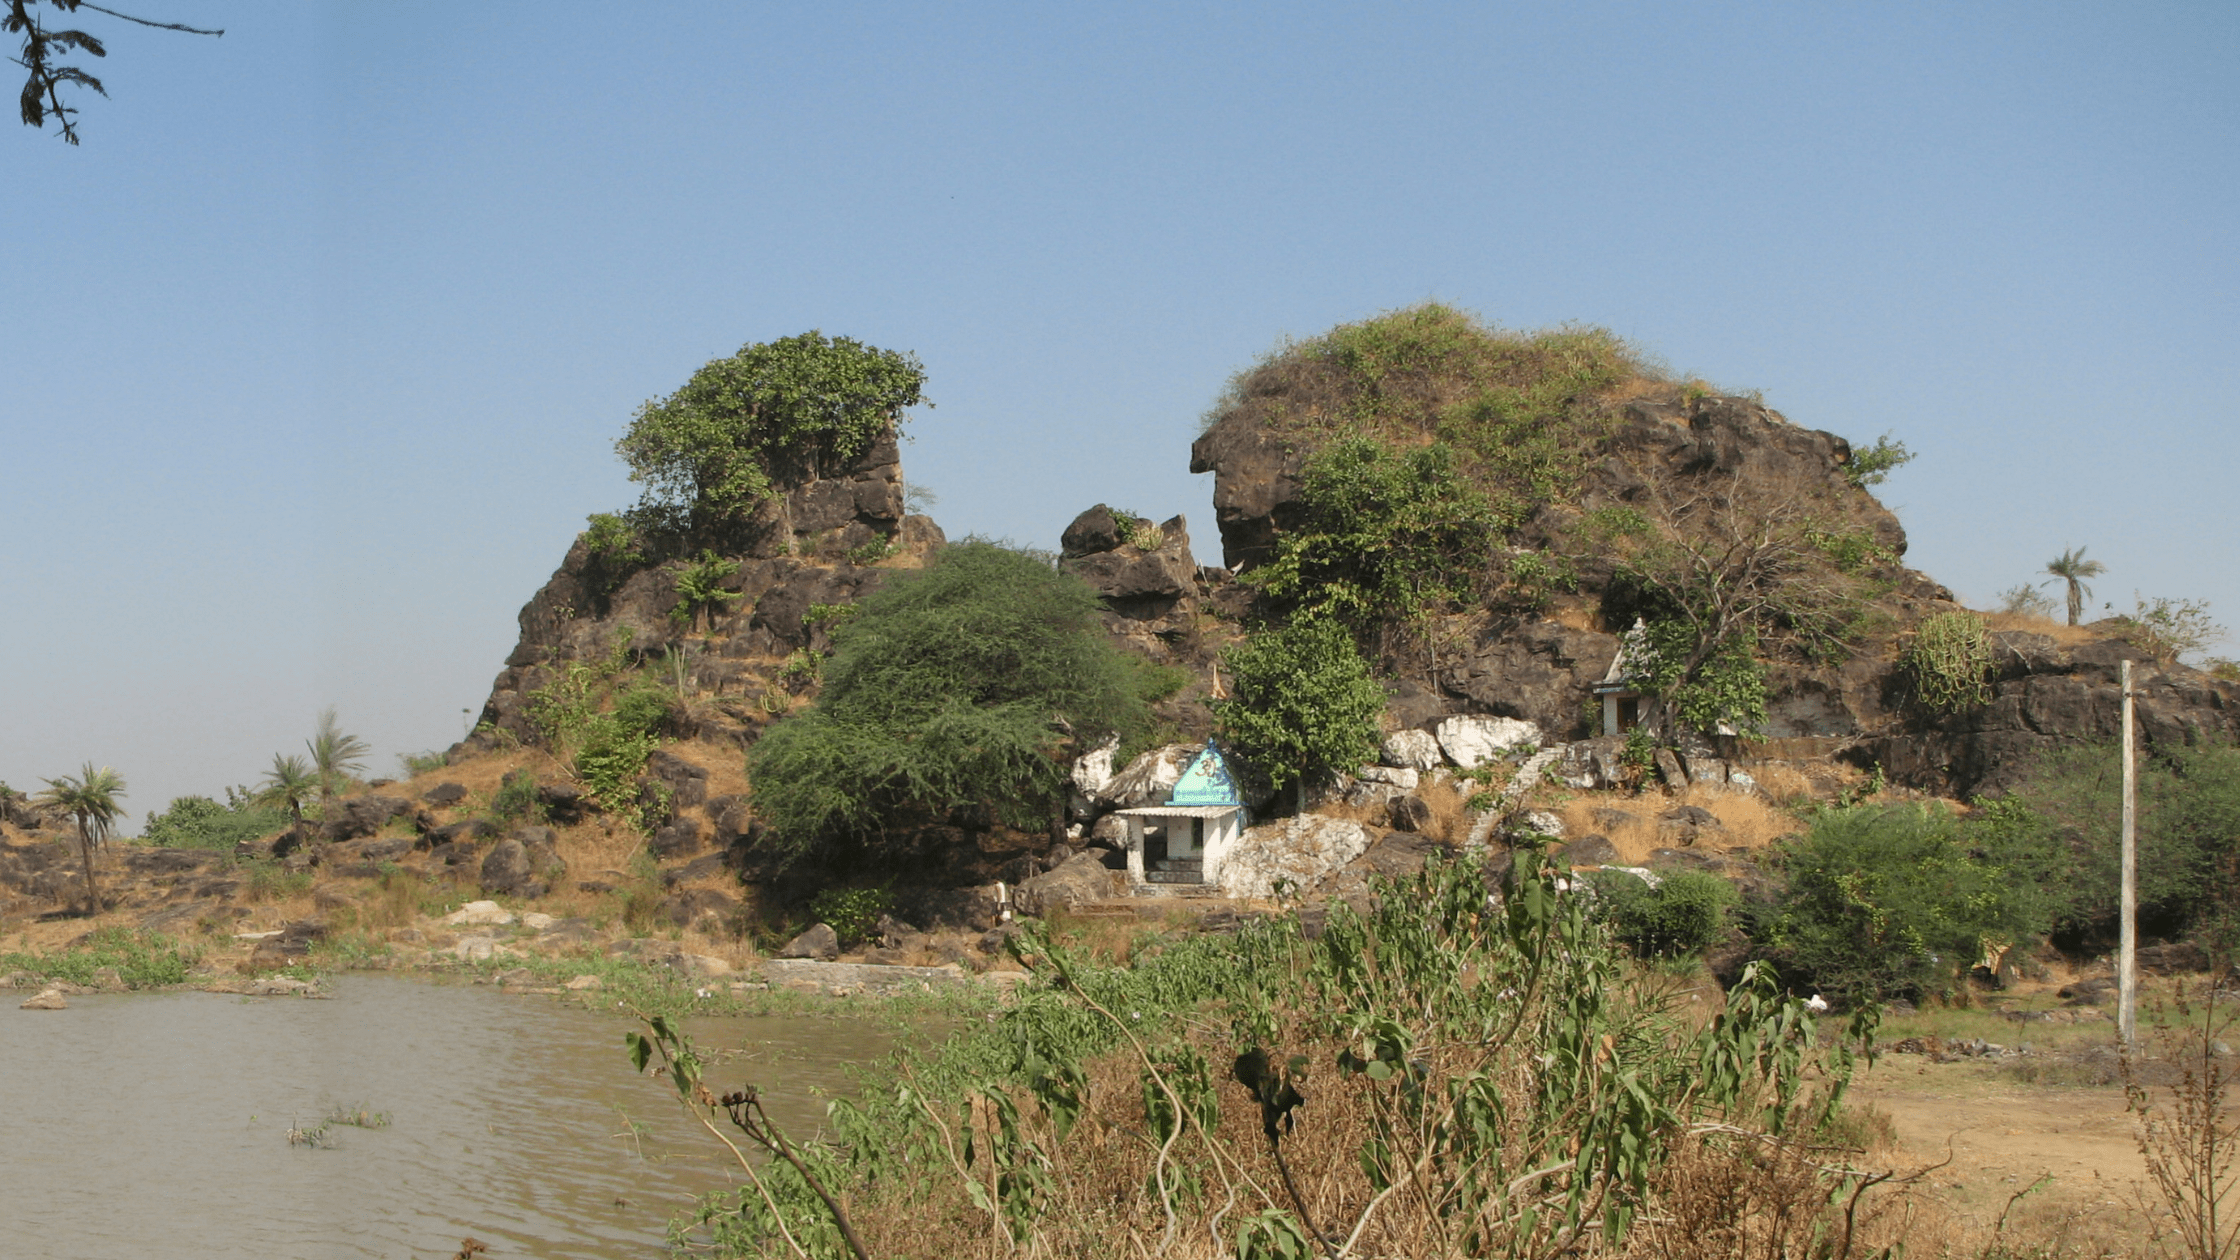 Dativare Fort